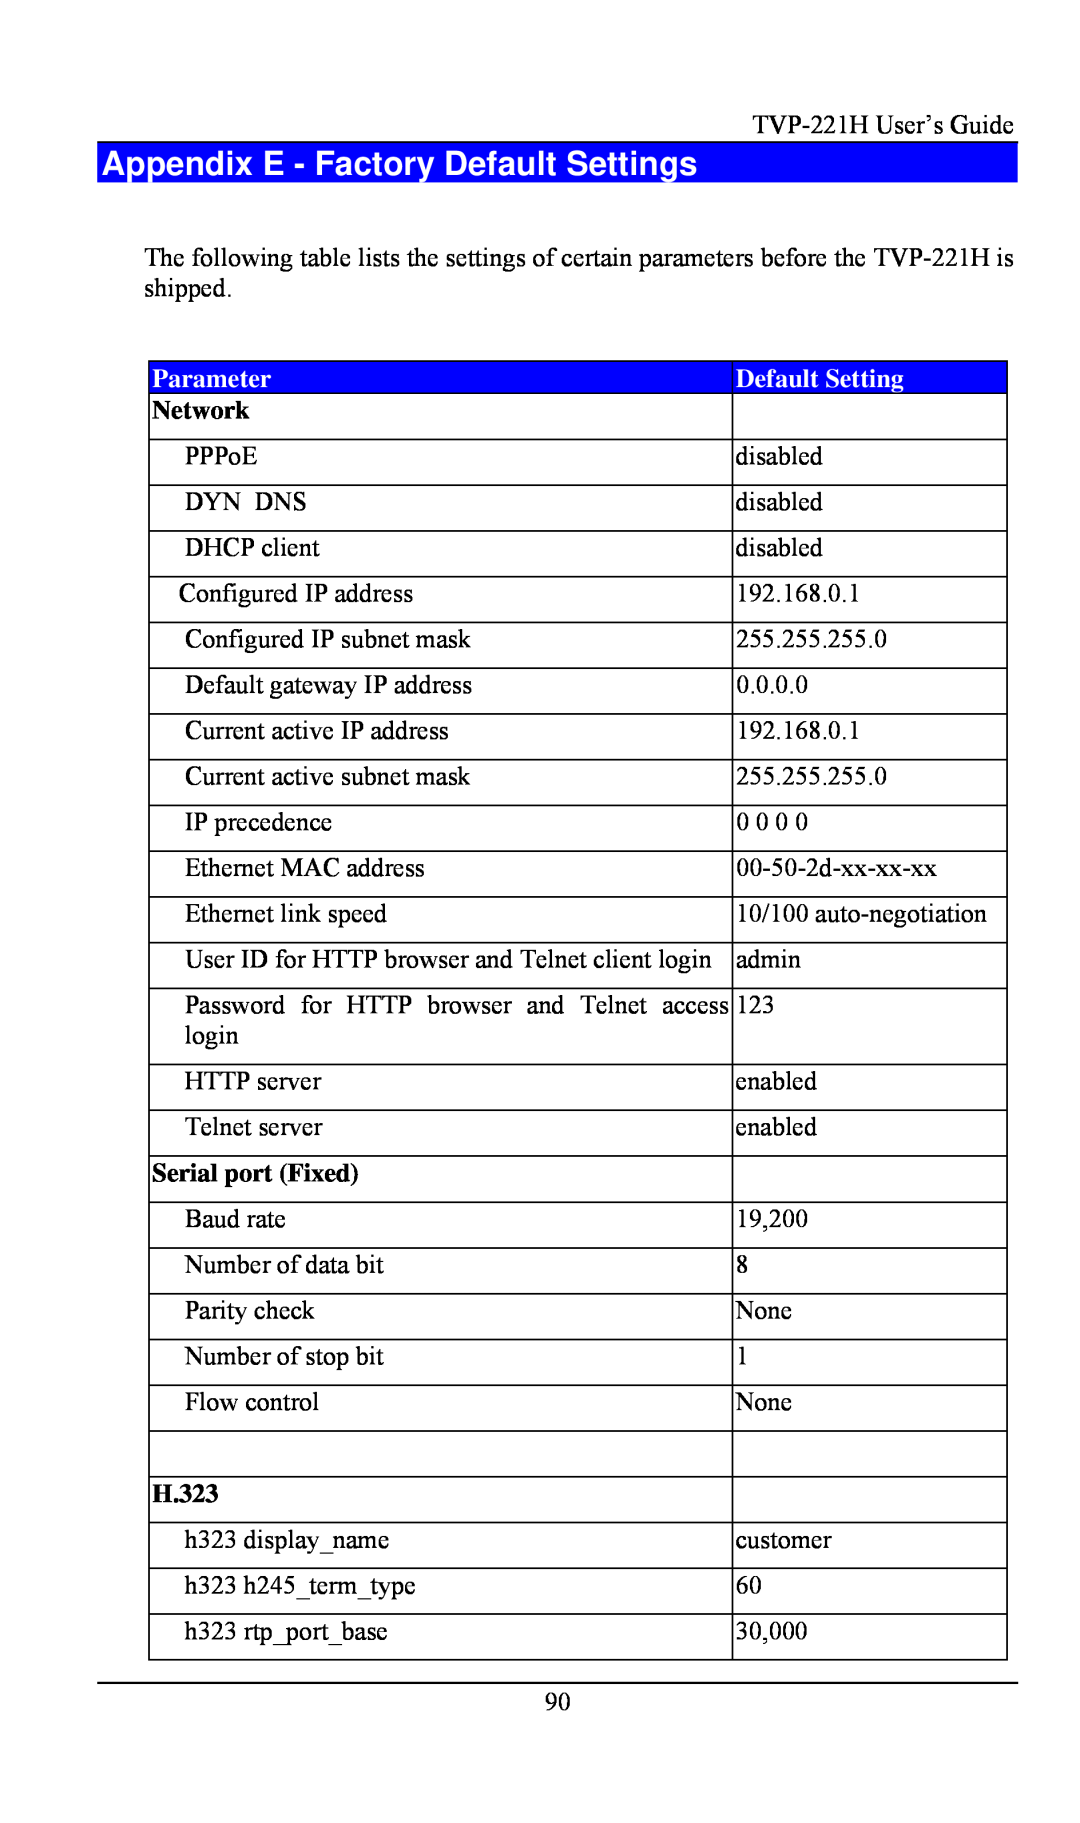 TRENDnet TVP- 221H, VoIP Gateway manual Appendix E - Factory Default Settings, Parameter, Network, Serial port Fixed, H.323 